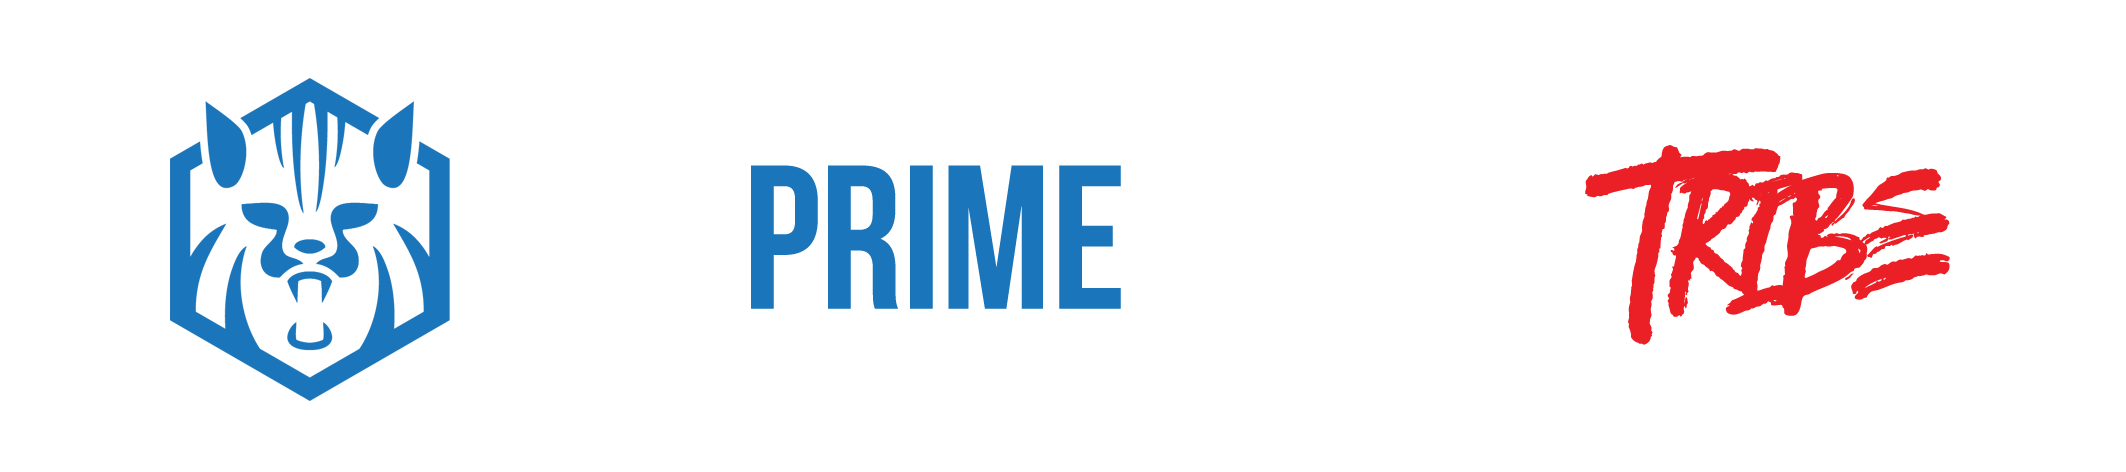 The Prime Human